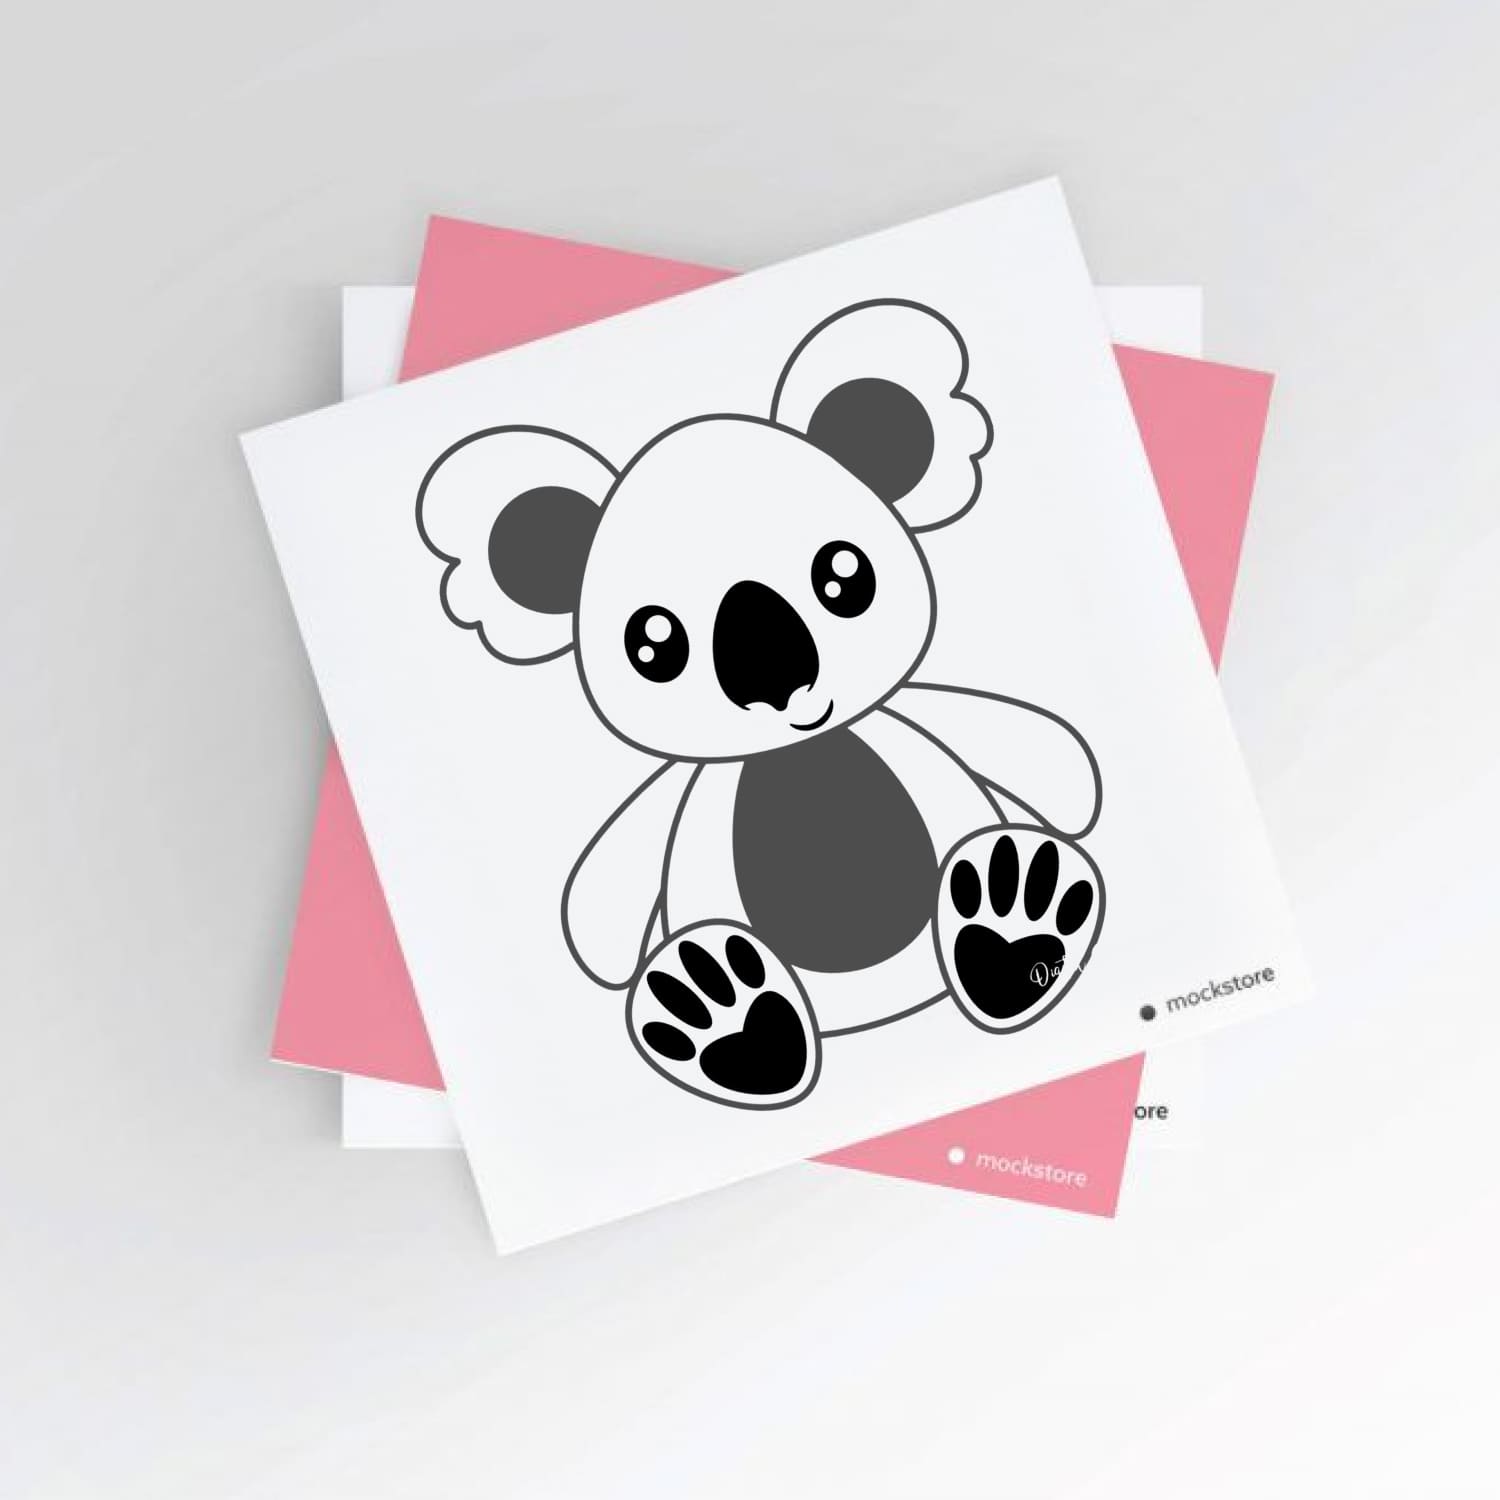 Koala SVG / PNG / EPS / DXF Files cover.